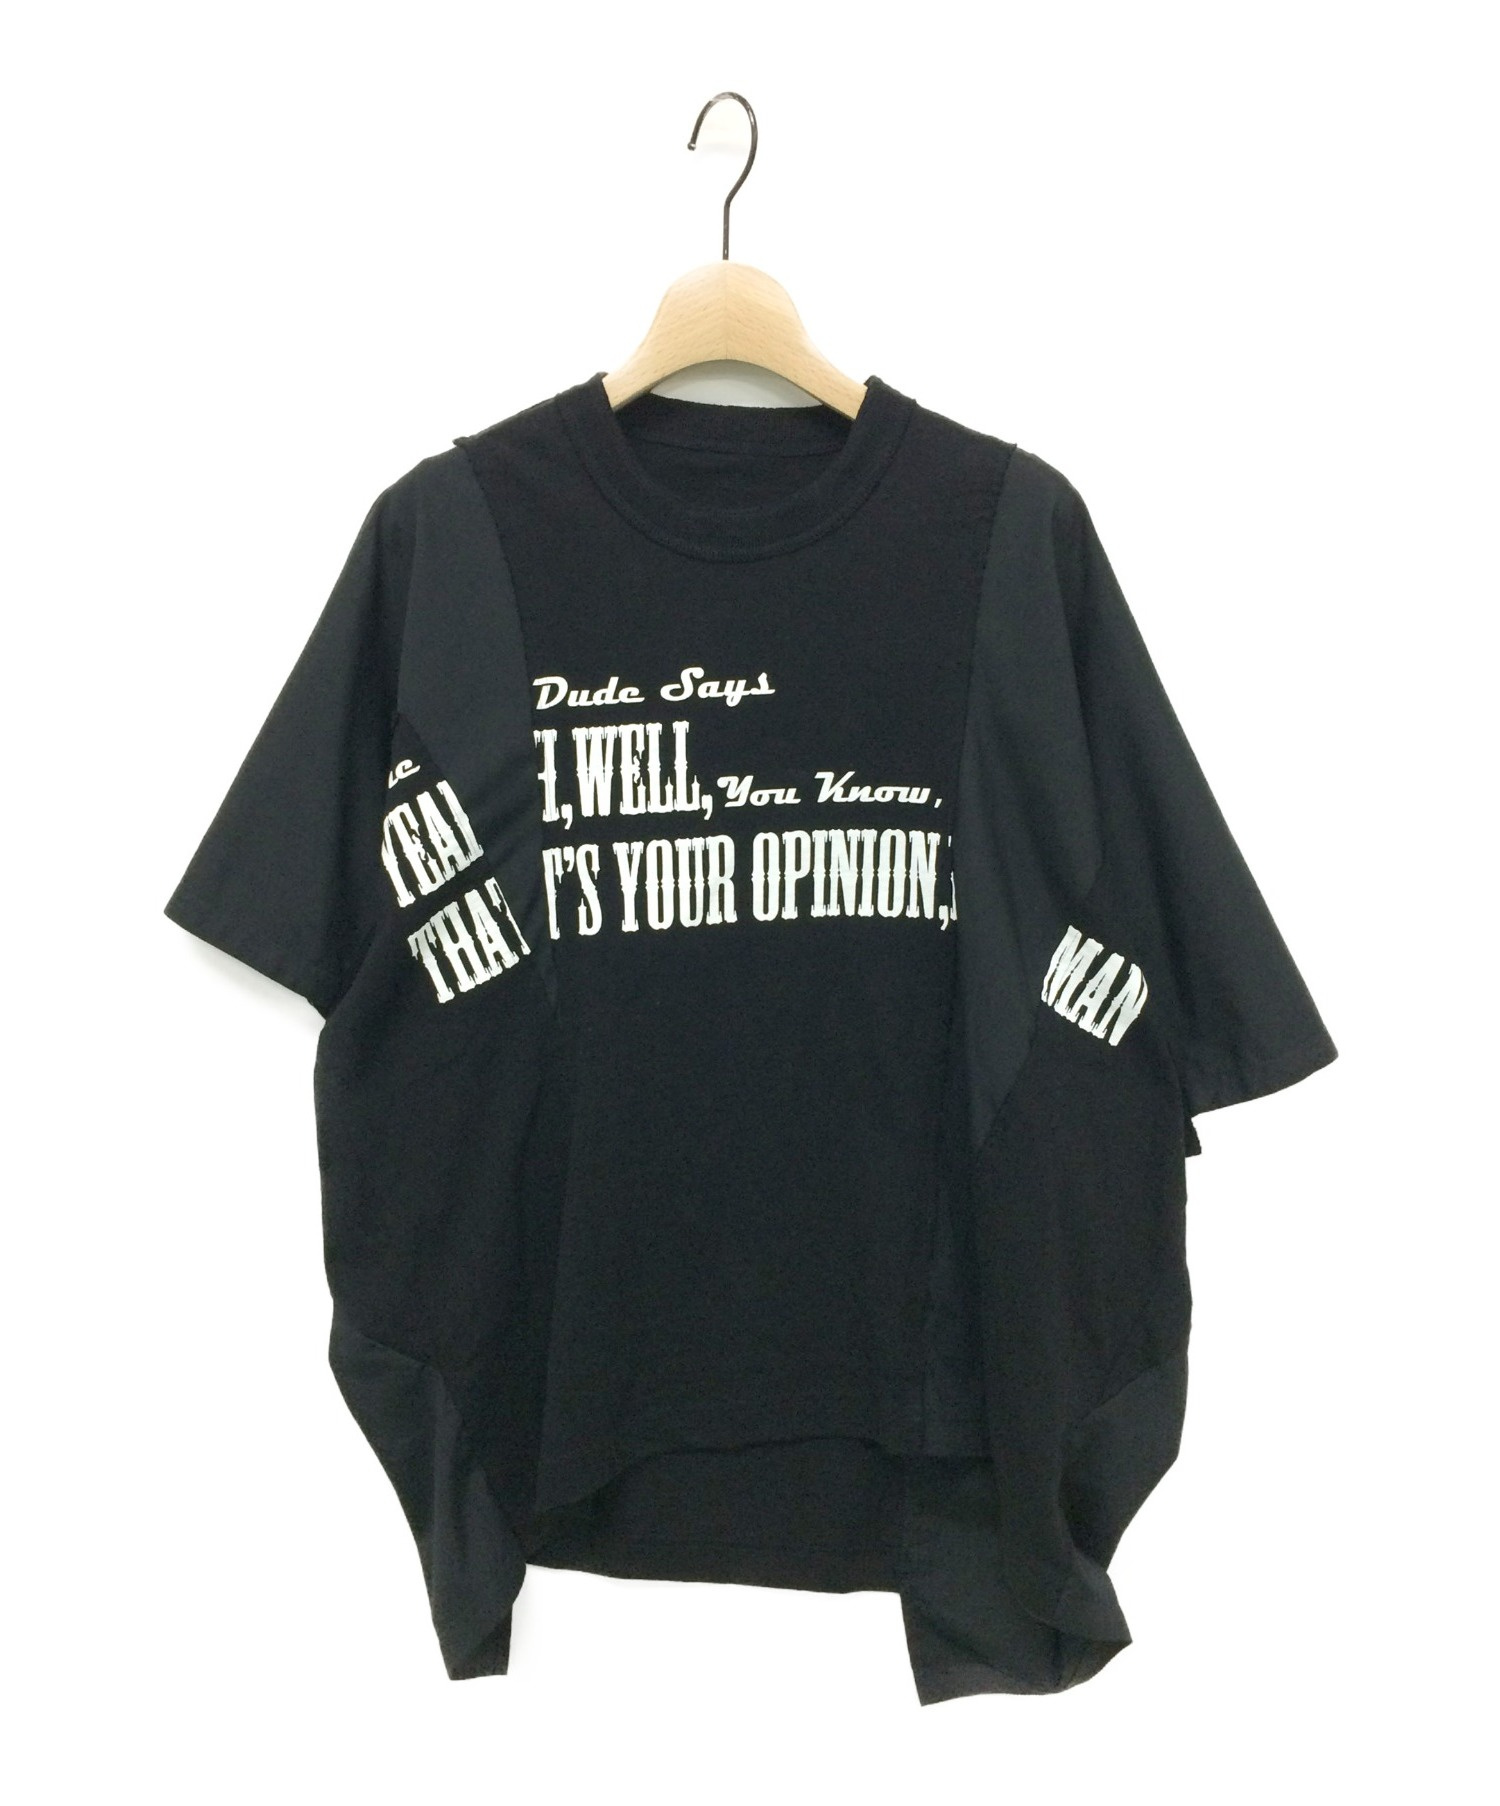 sacai (サカイ) ×THE BIG LEBOWSKI 再構築Tシャツ ブラック サイズ:2